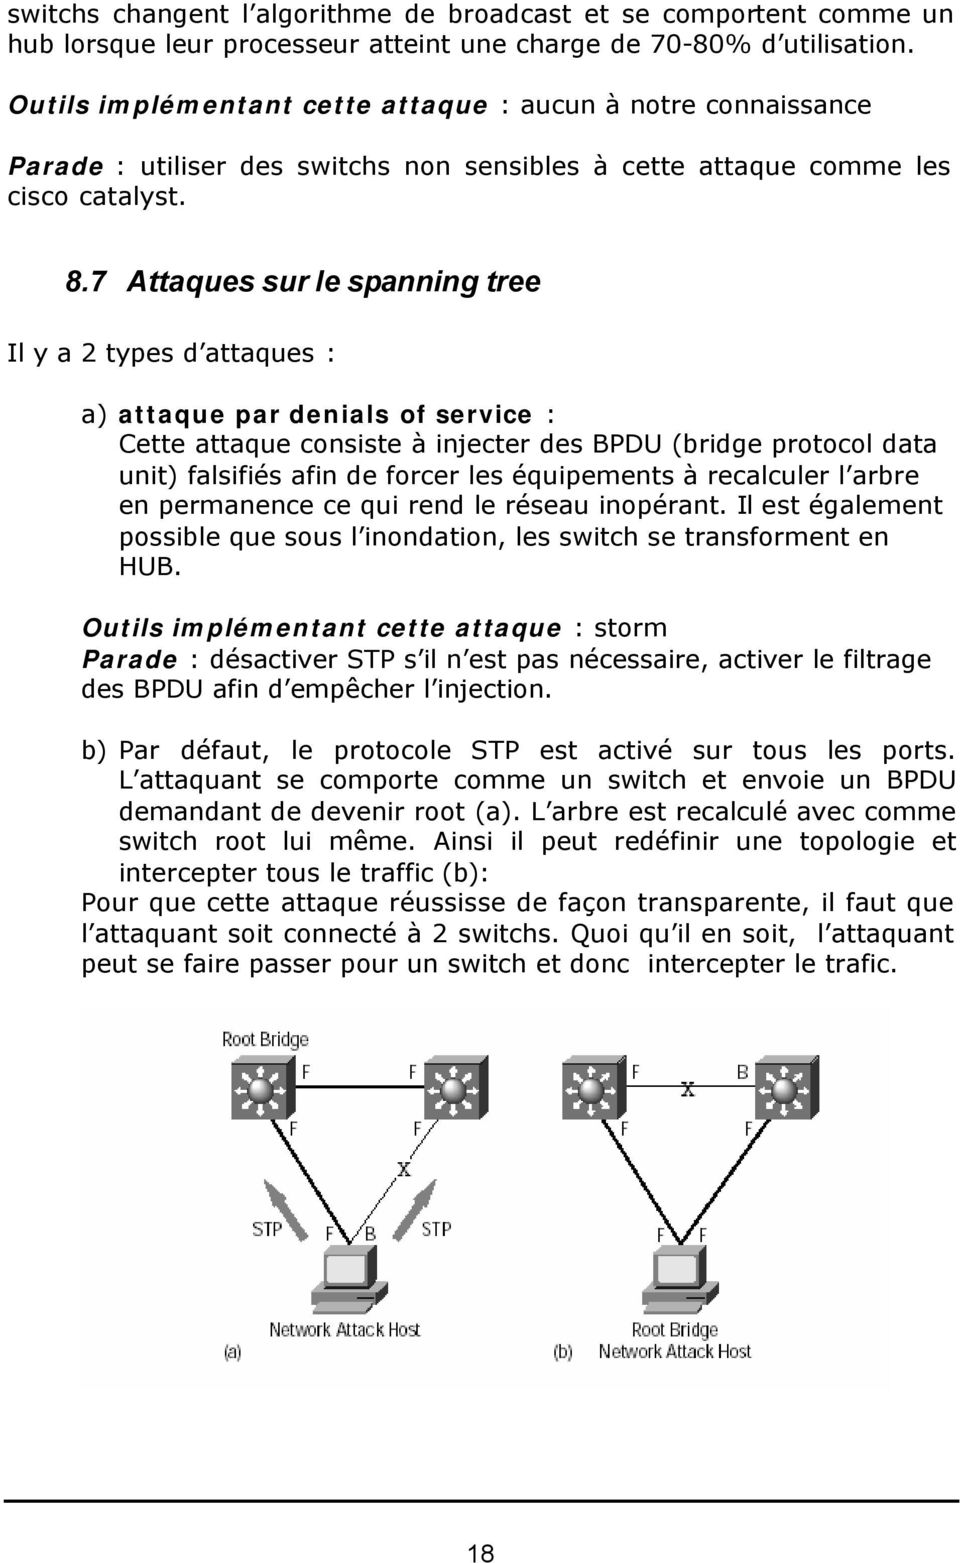 7 Attaques sur le spanning tree Il y a 2 types d attaques : a) attaque par denials of service : Cette attaque consiste à injecter des BPDU (bridge protocol data unit) falsifiés afin de forcer les